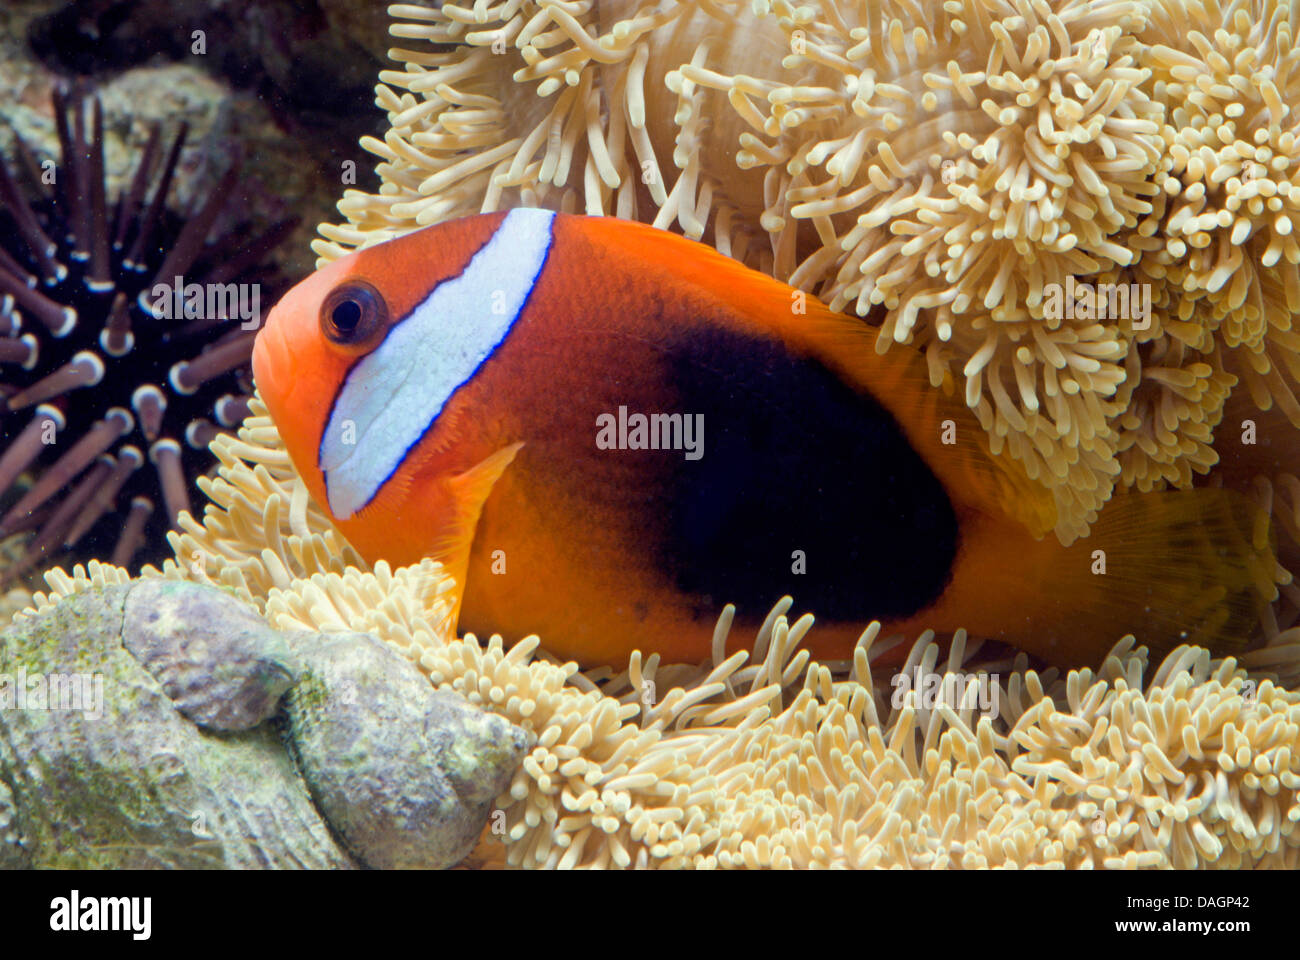 Anemonefish nero, dusky anemonefish, fire clownfish (Amphiprion melanopus), tra i tentacoli di un anemone marittimo Foto Stock